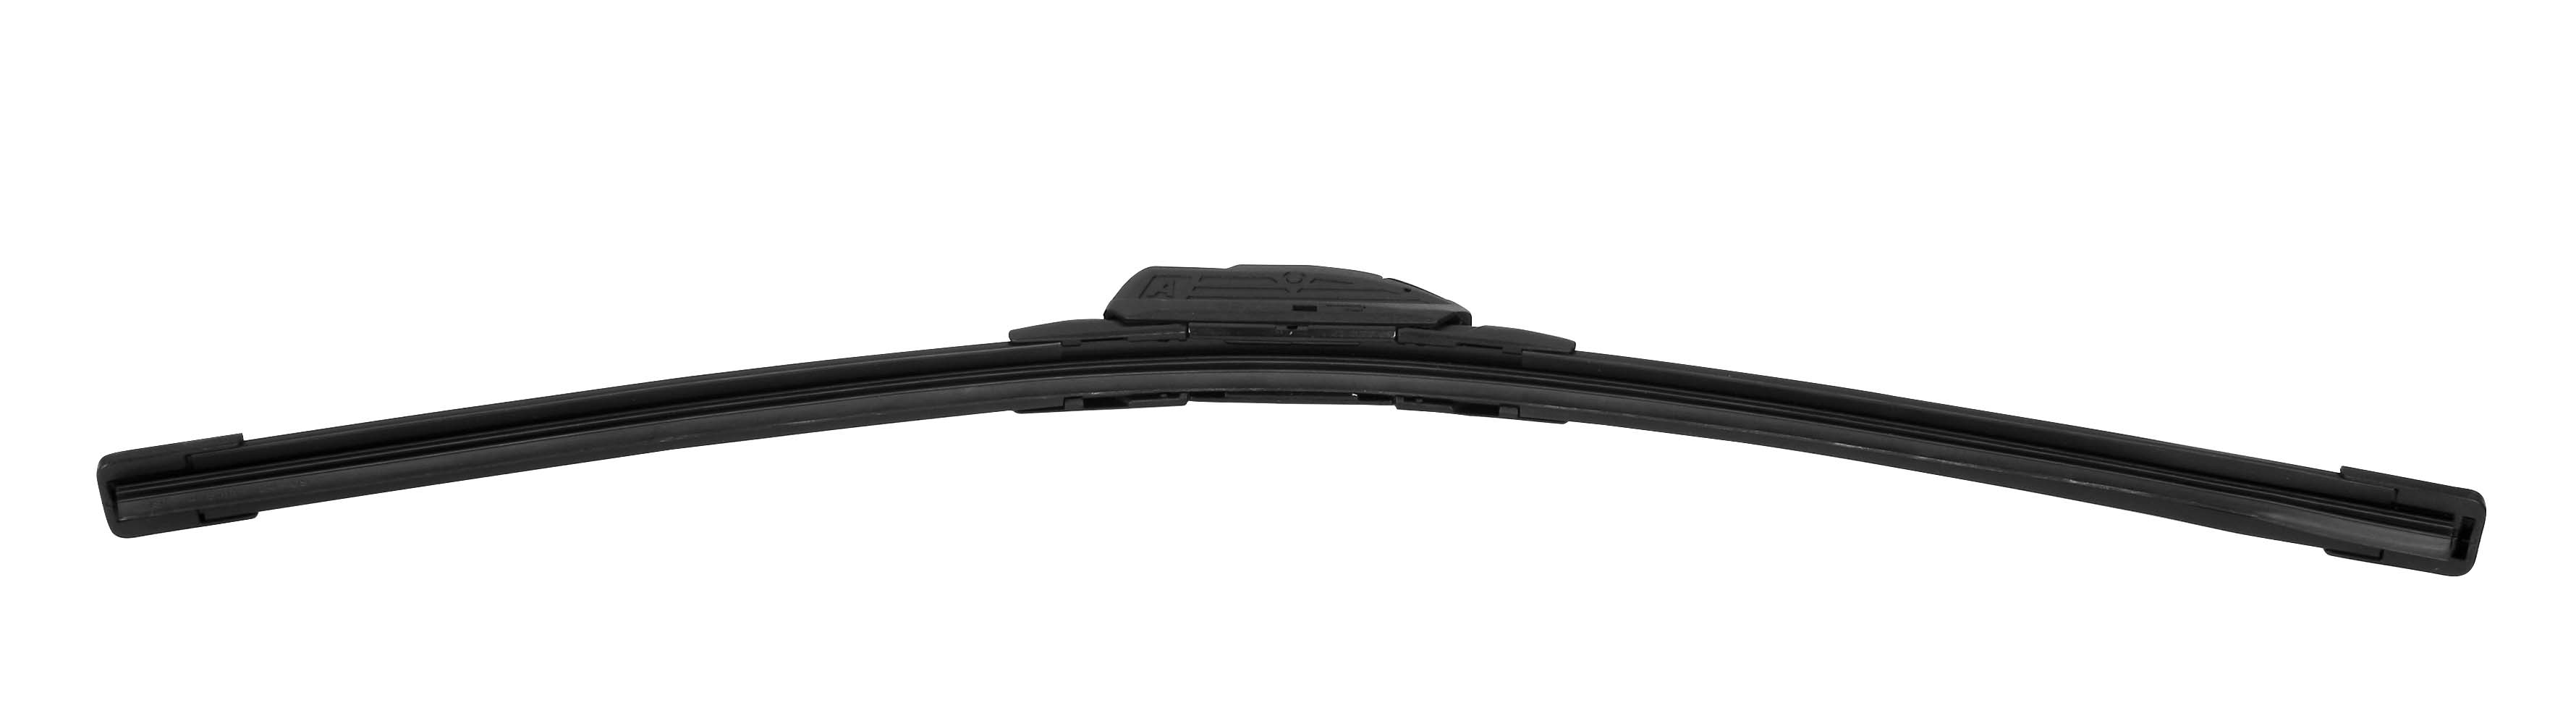 Filson wiper blade 8 adaptors 66 cm (26“) - 1 pcs thumb